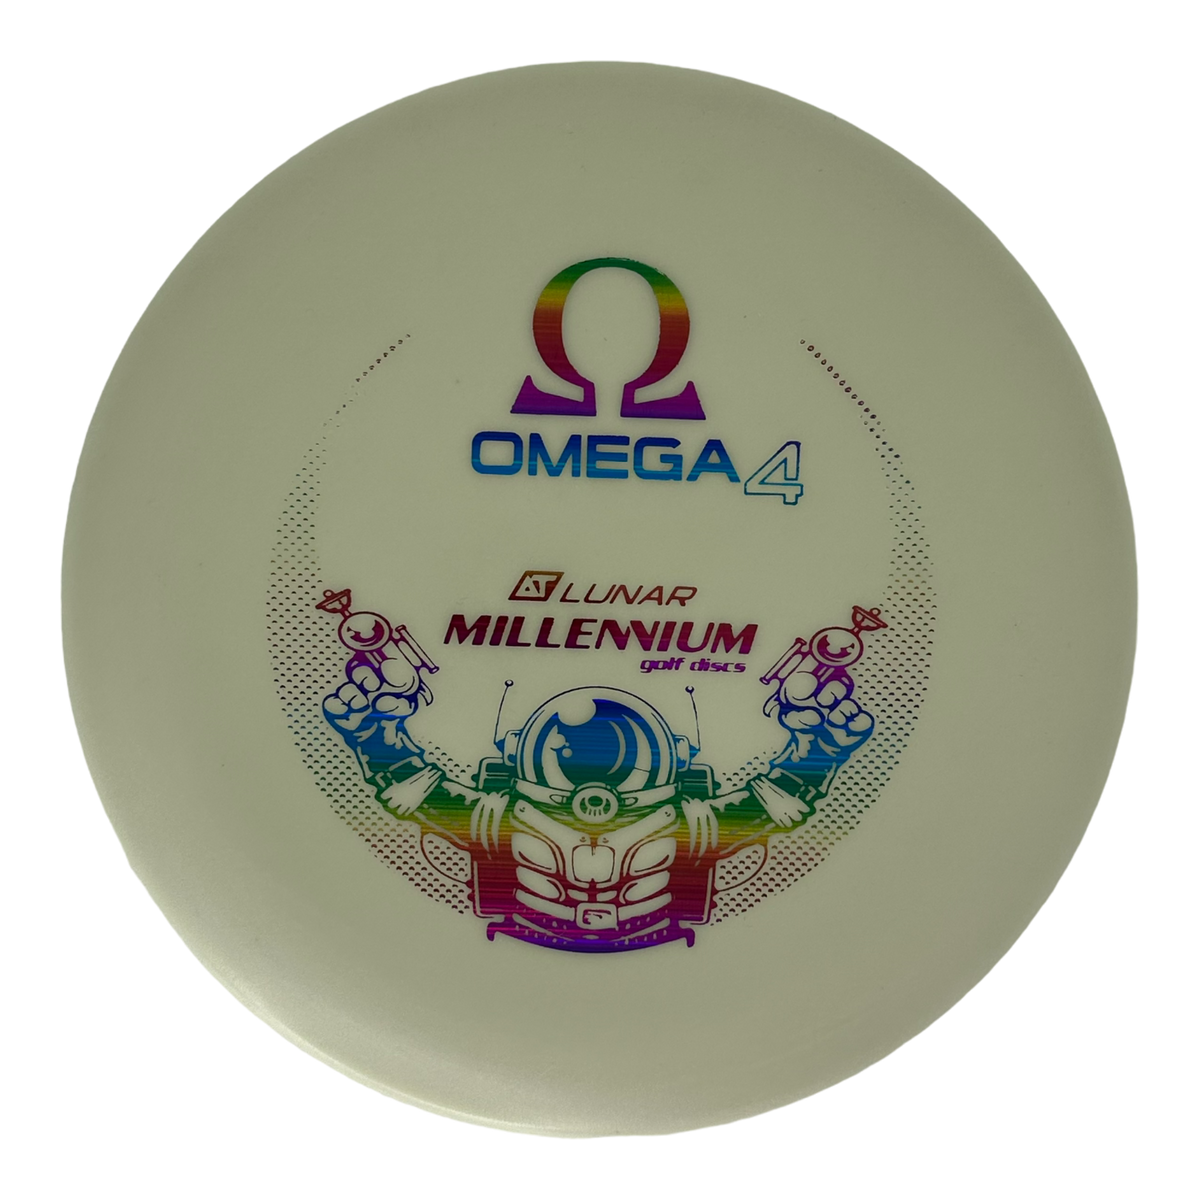 Millennium Delta-T Lunar Omega 4 - First Contact